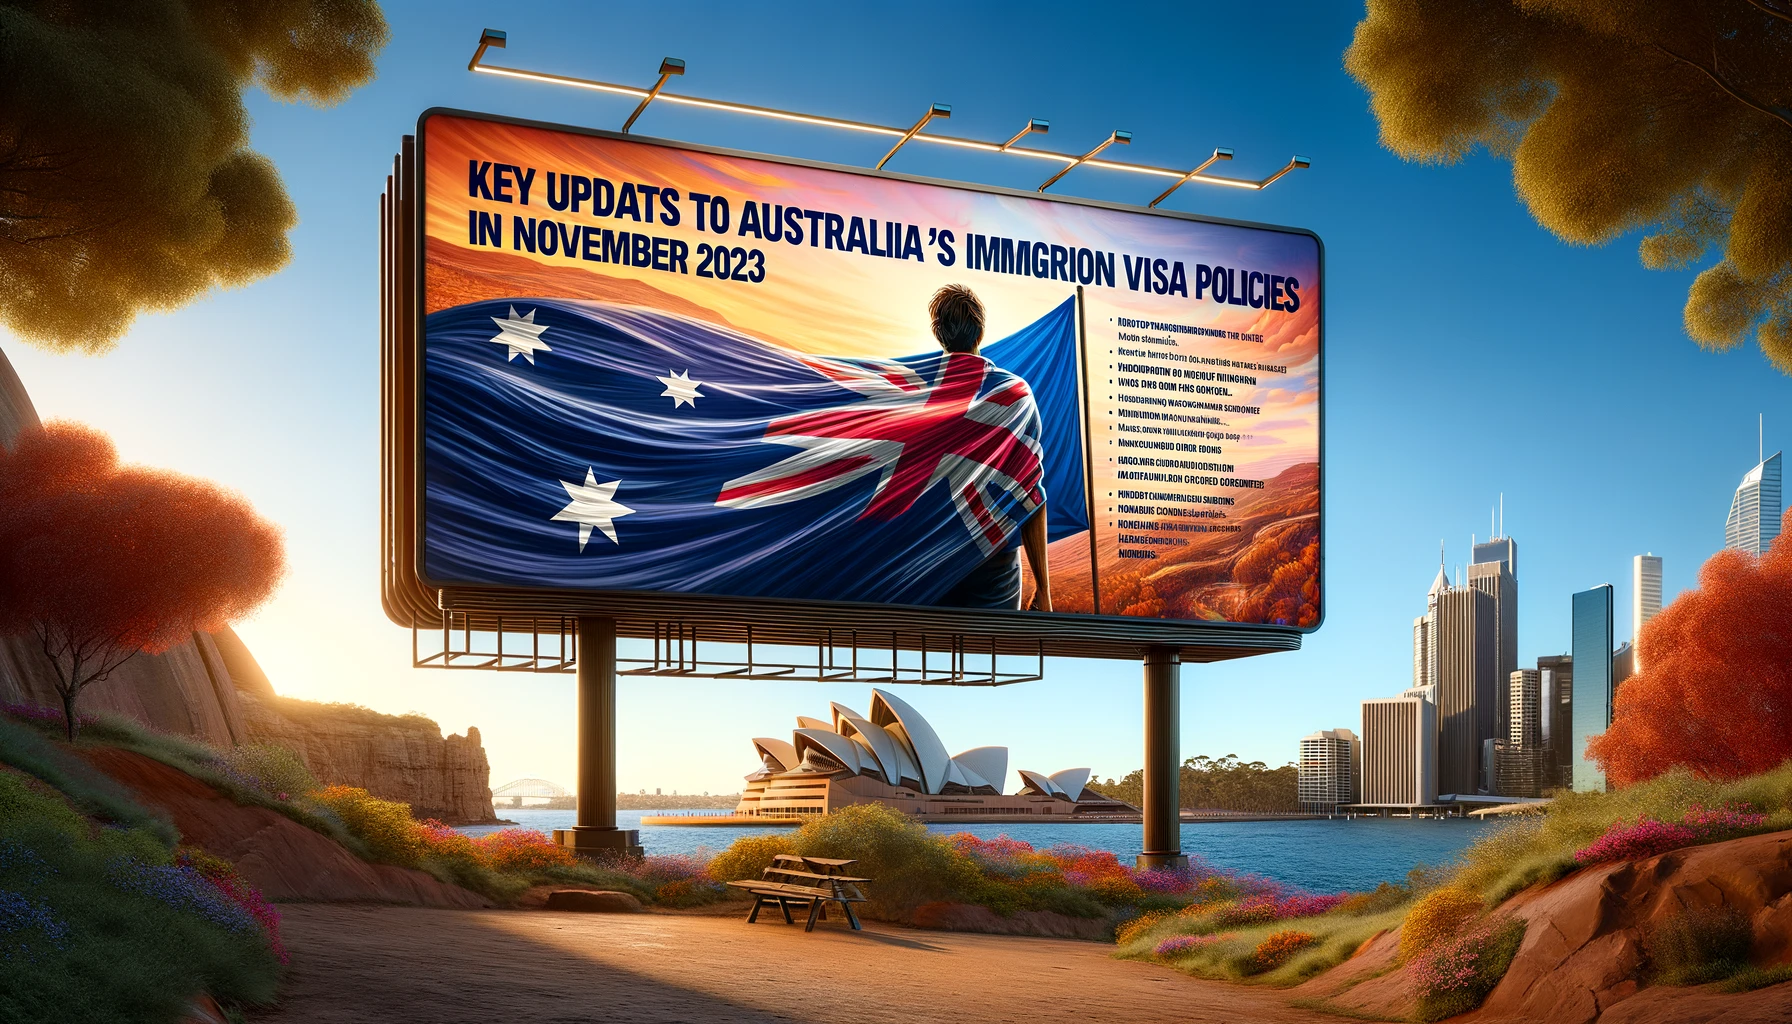 Key Updates to Australia's Immigration Visa Policies in November 2023